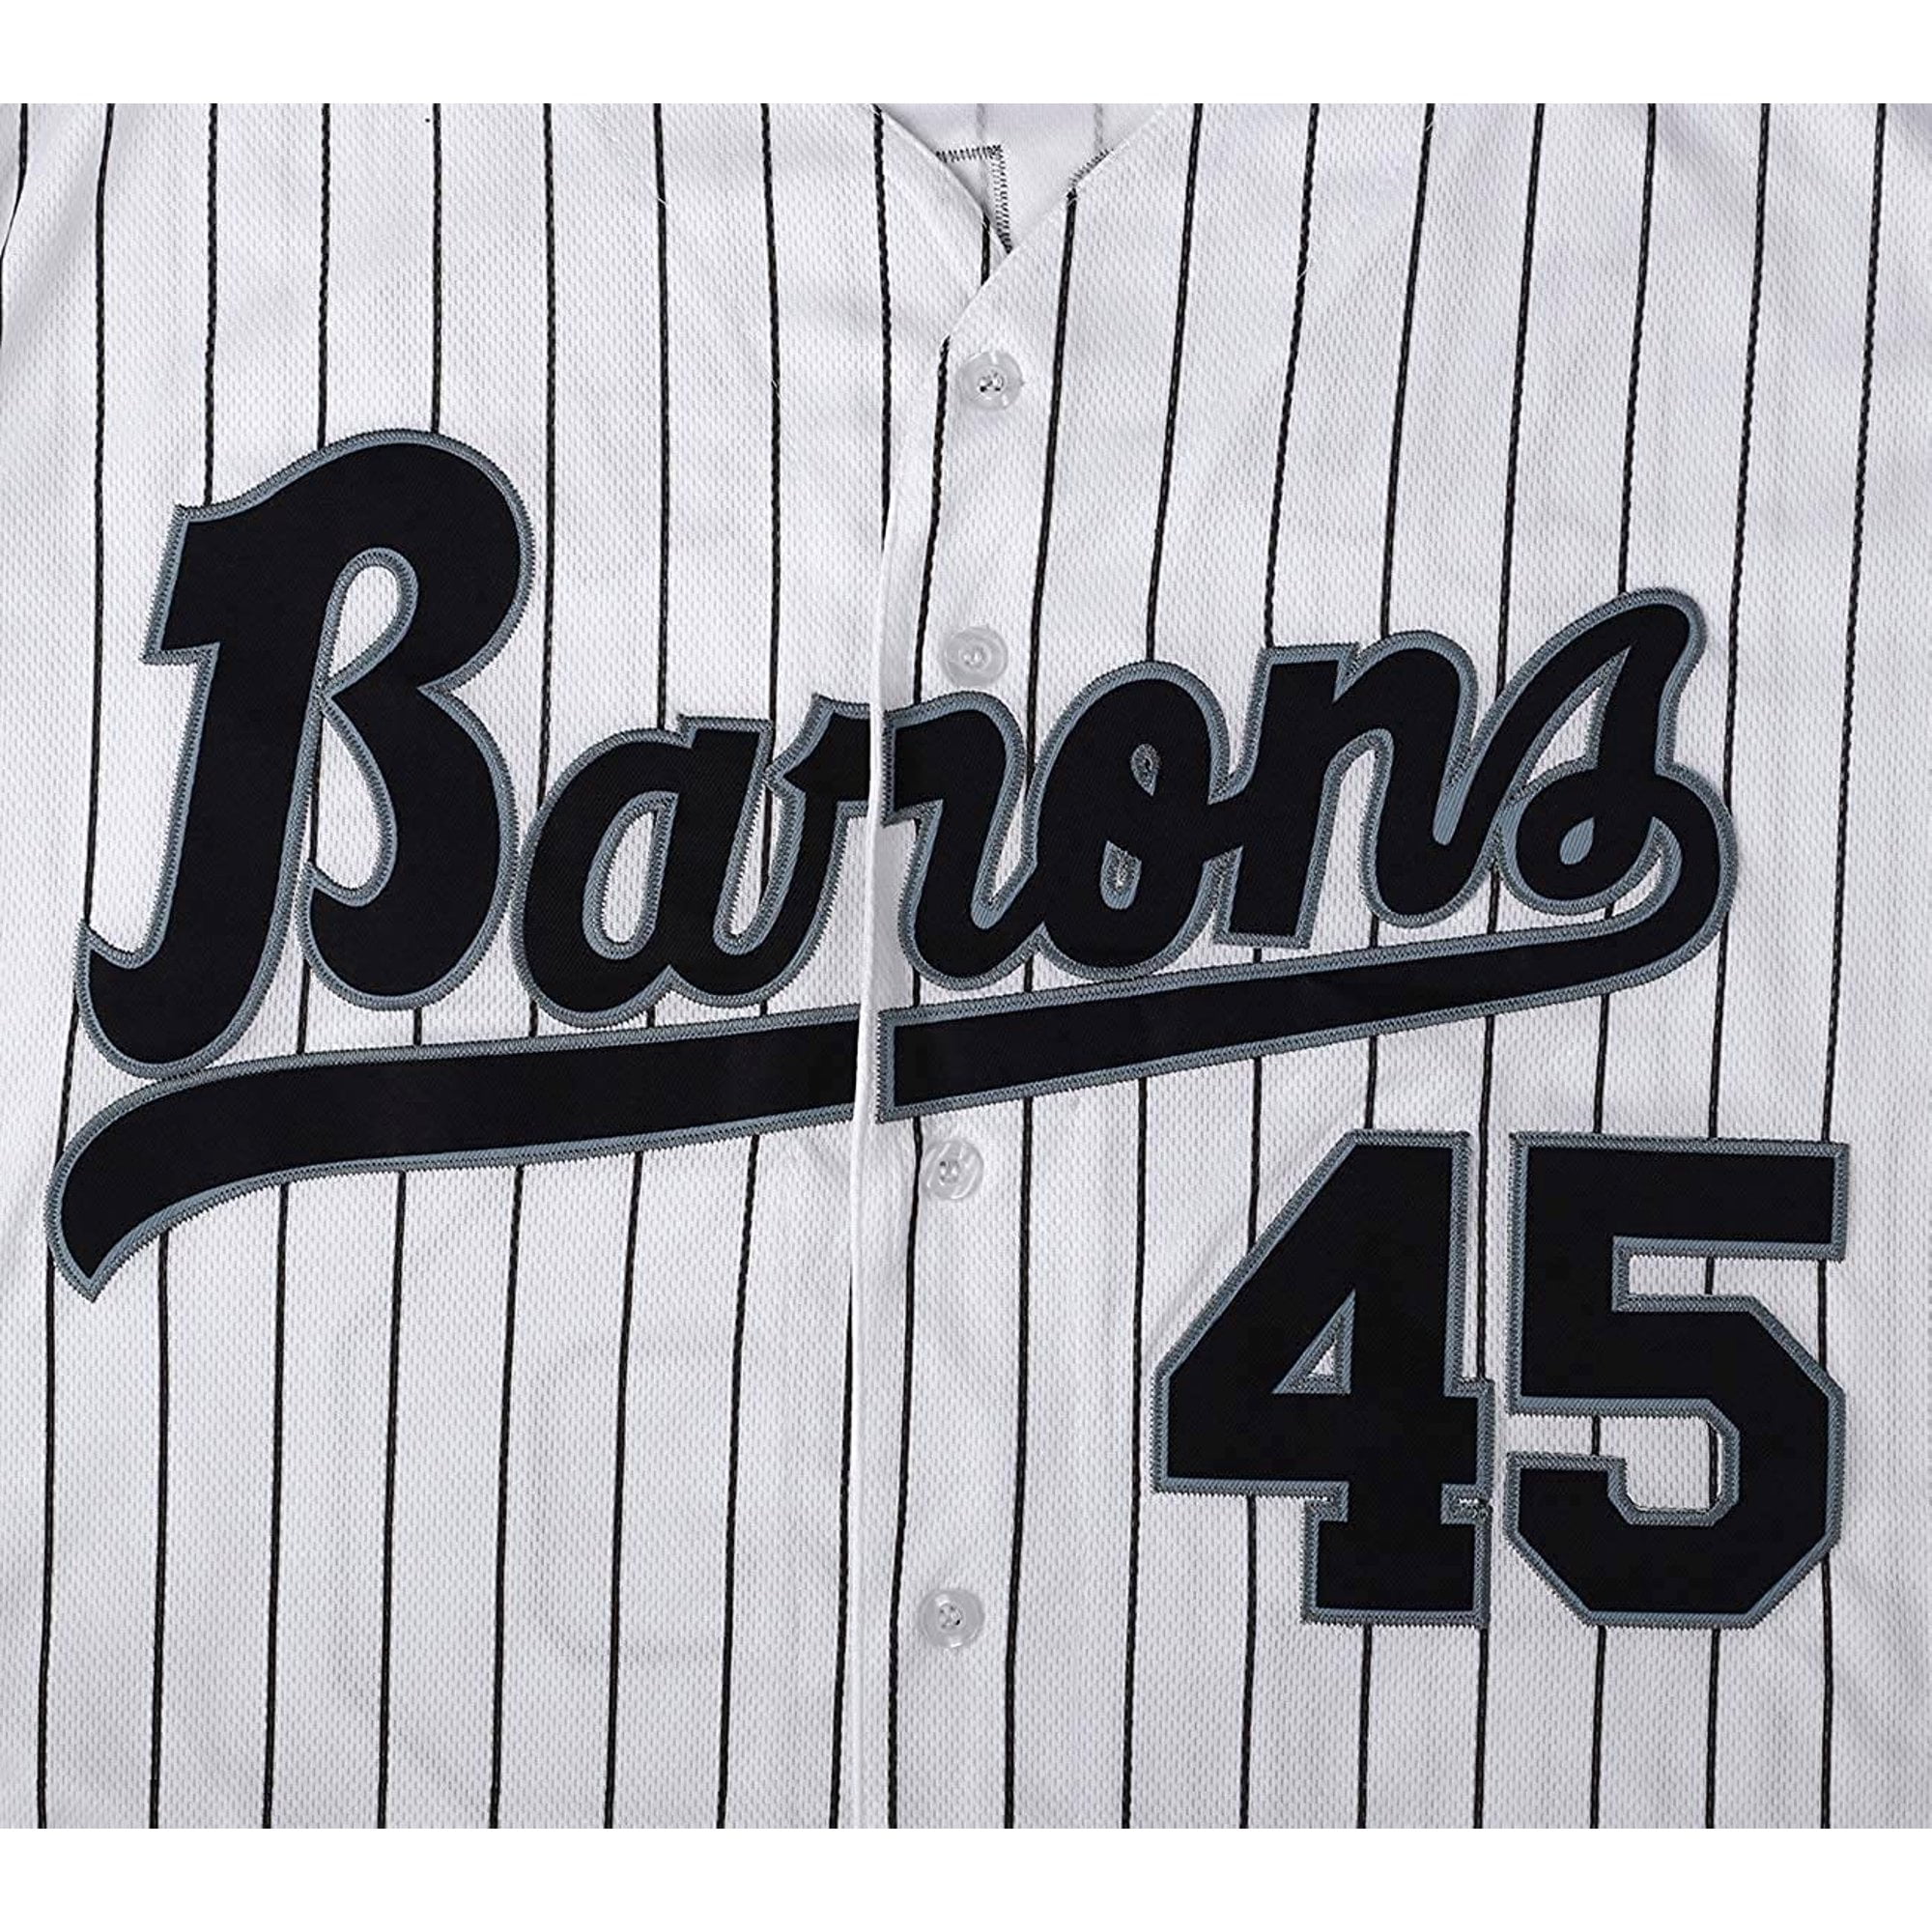 45 Barons White Pinstripe Jersey – Birmingham Barons